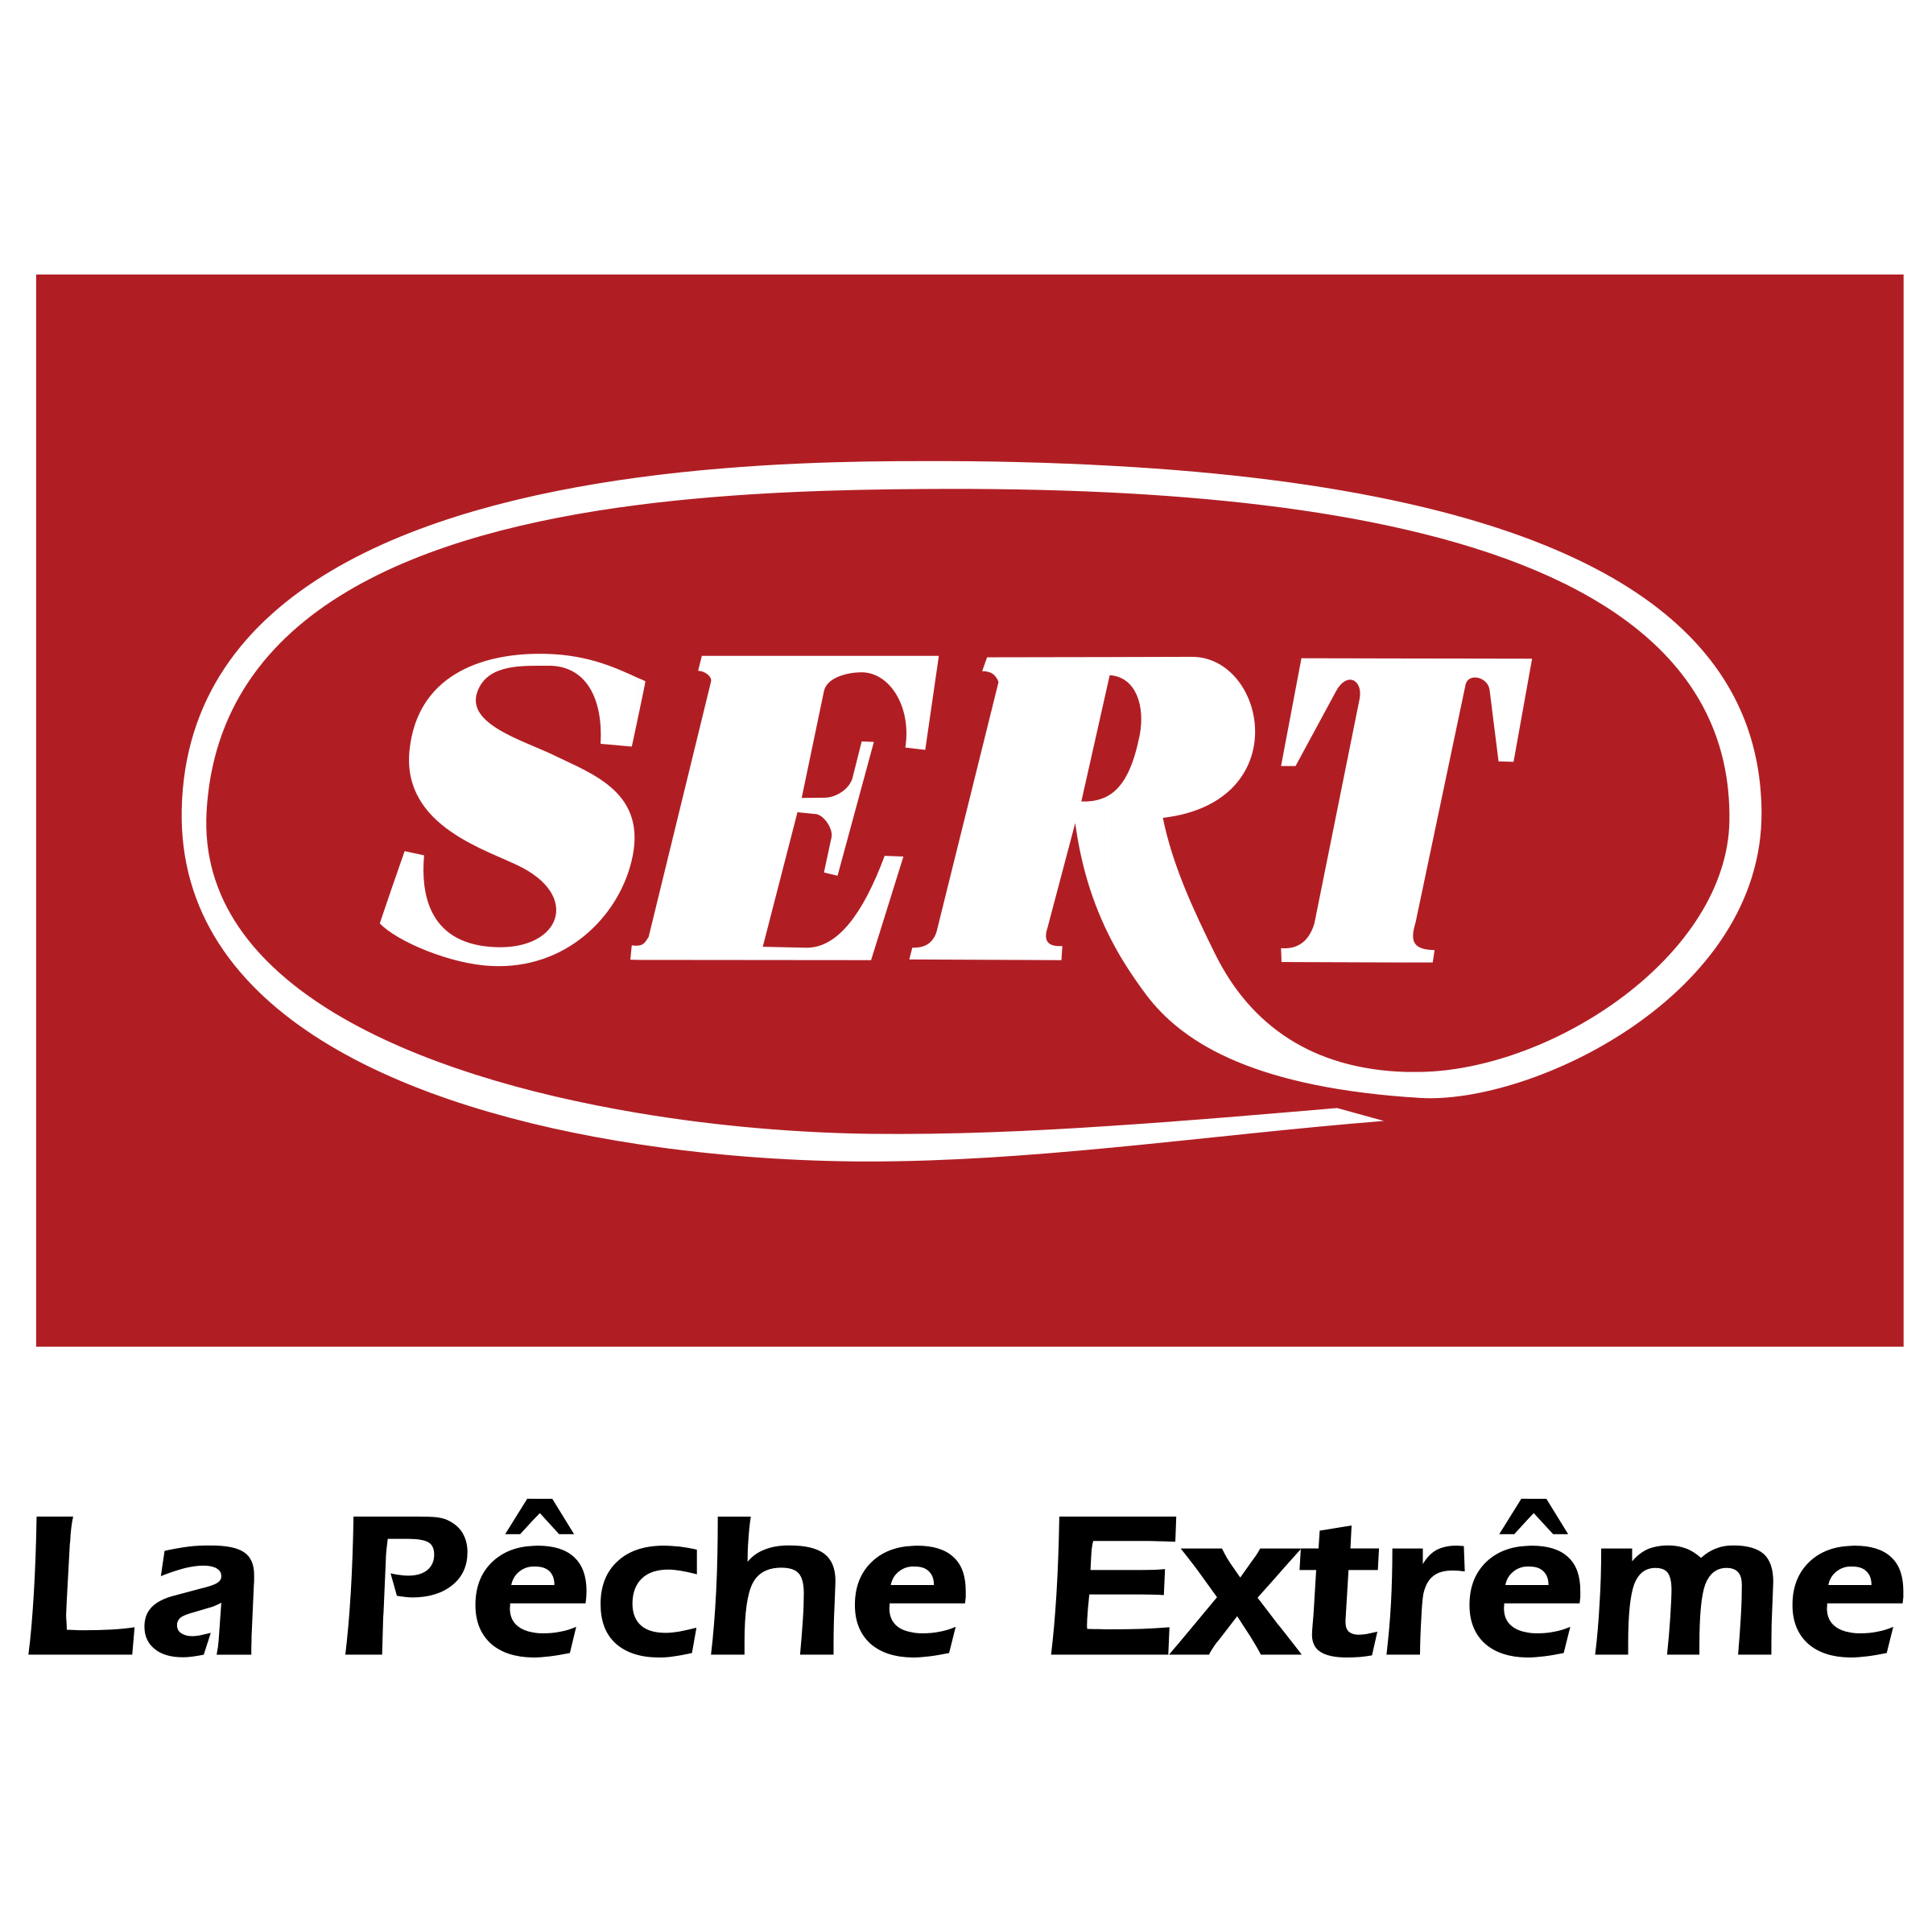 Sert Logo - Sert Logo PNG Transparent & SVG Vector - Freebie Supply